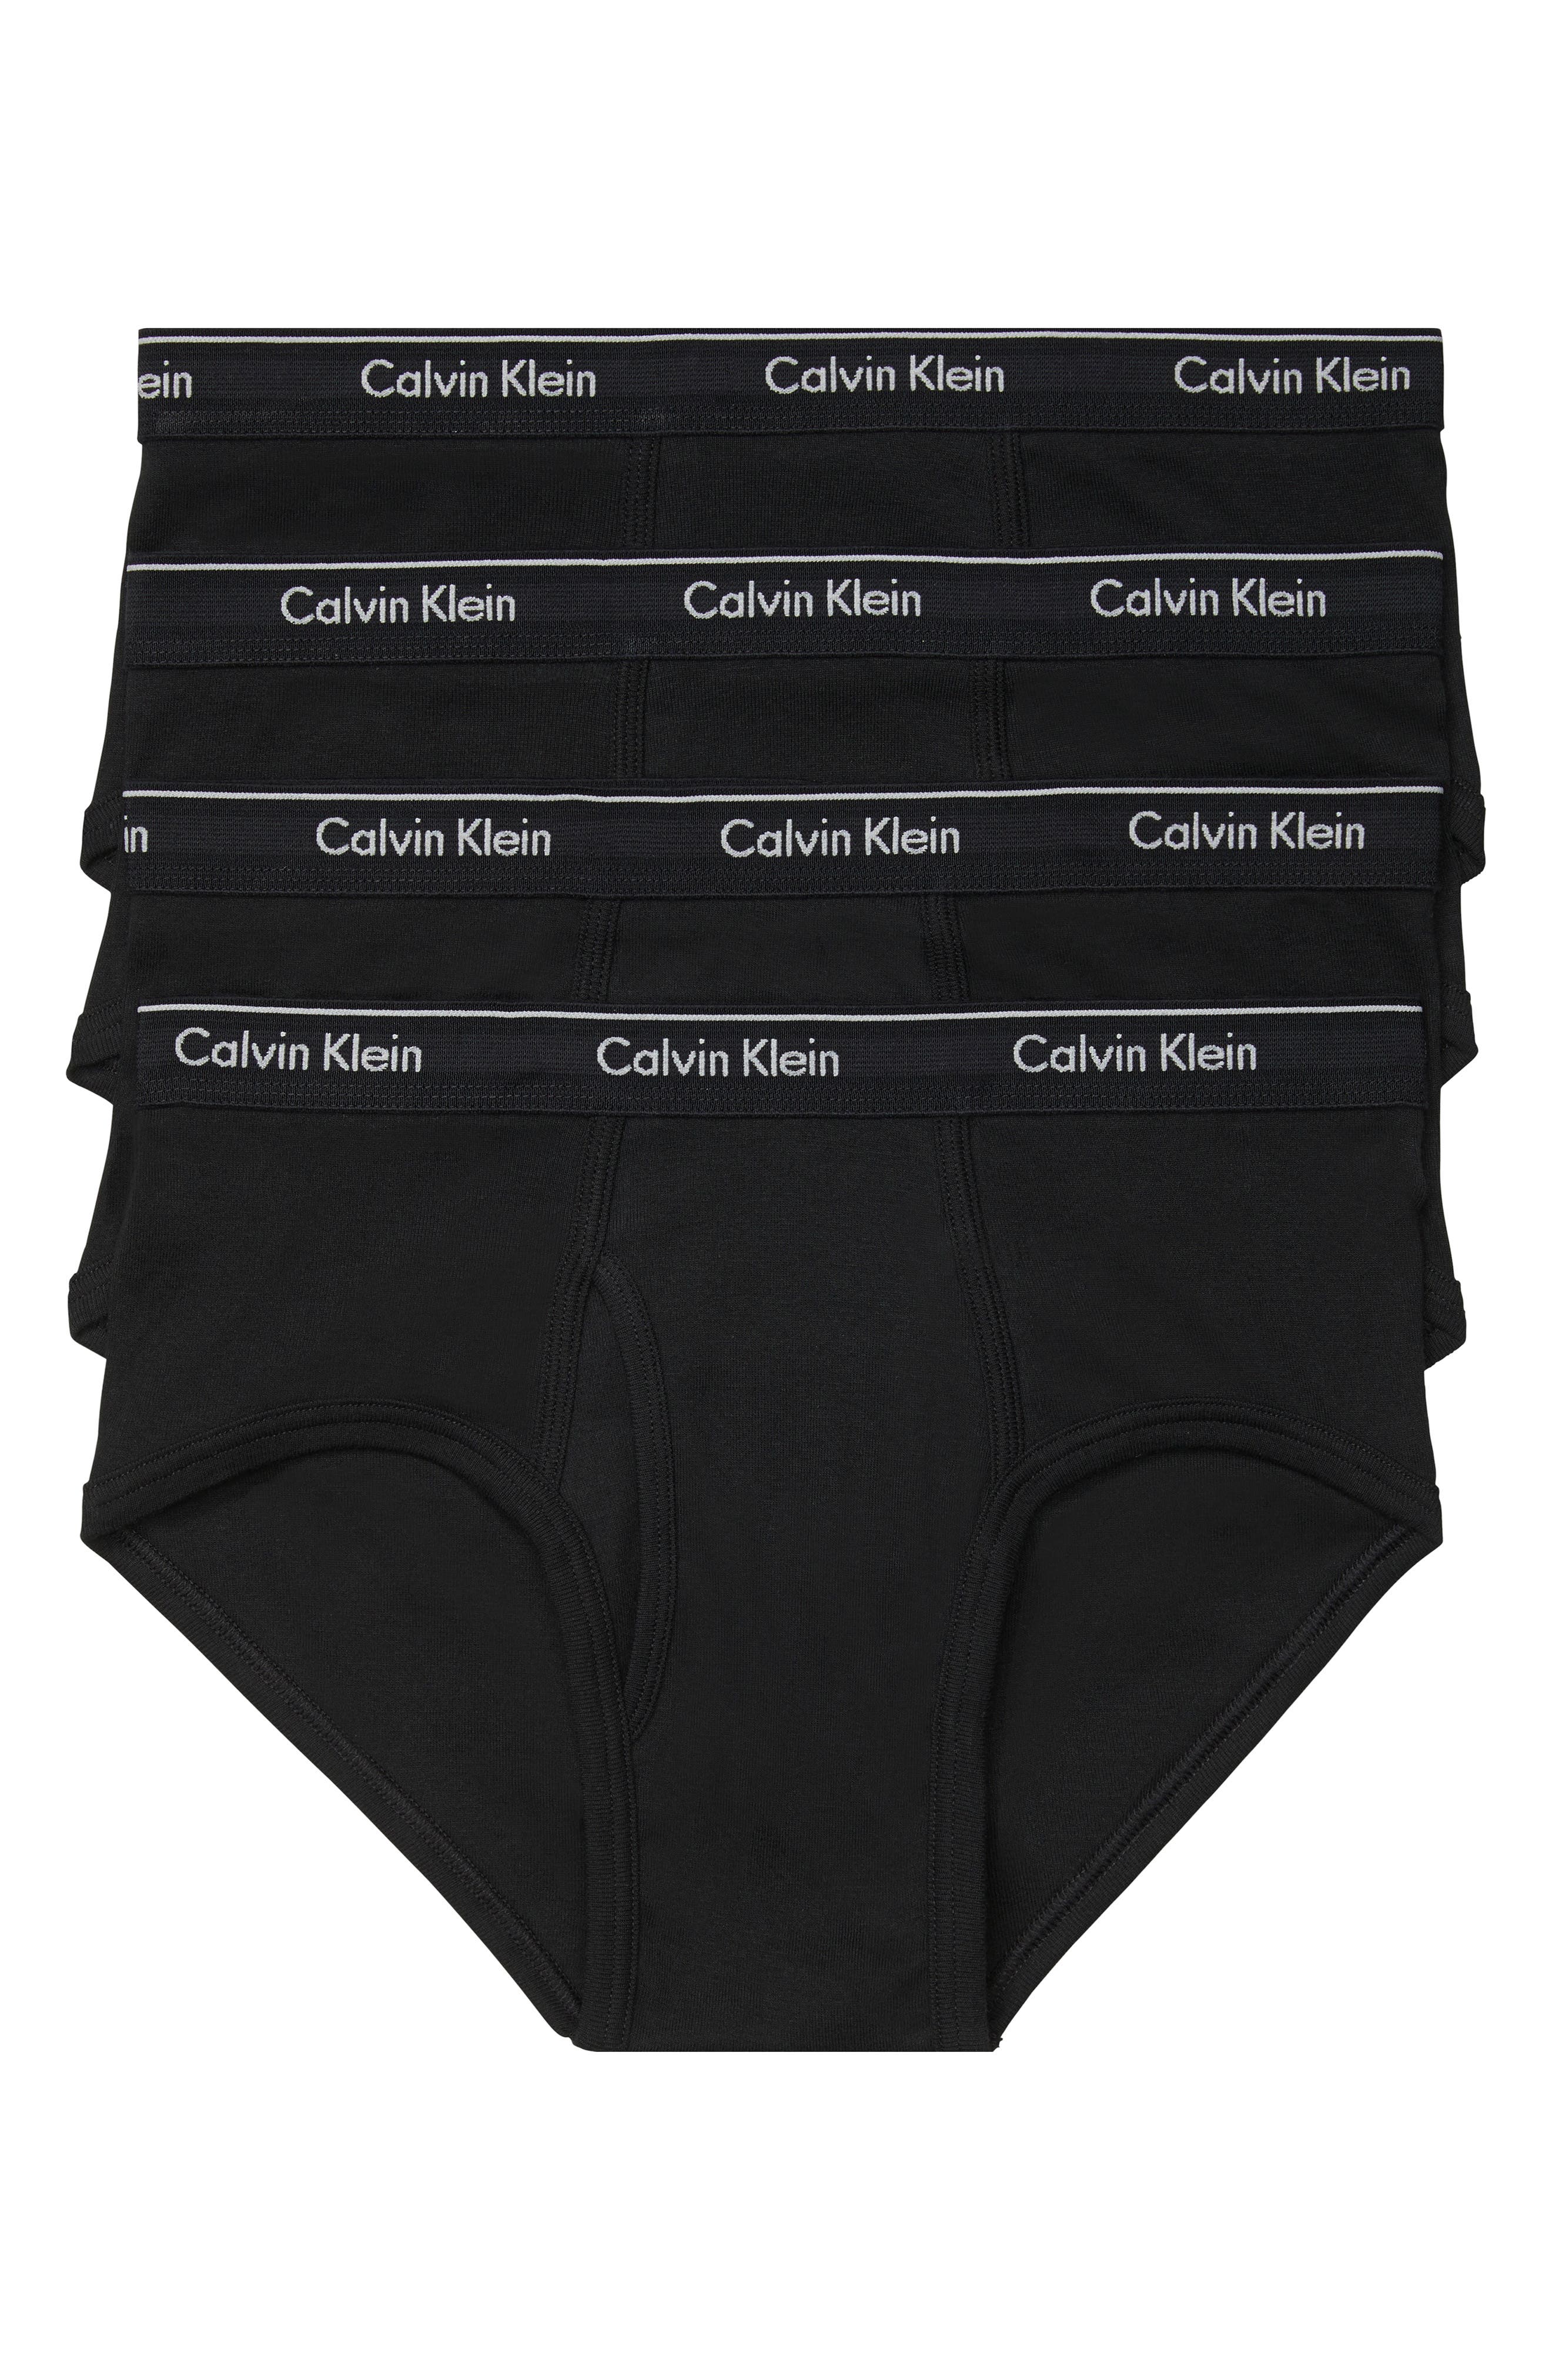 UPC 790812524015 product image for Men's Big & Tall Calvin Klein Men's Cotton Classics 3-Pack Briefs, Size 4XB - Bl | upcitemdb.com